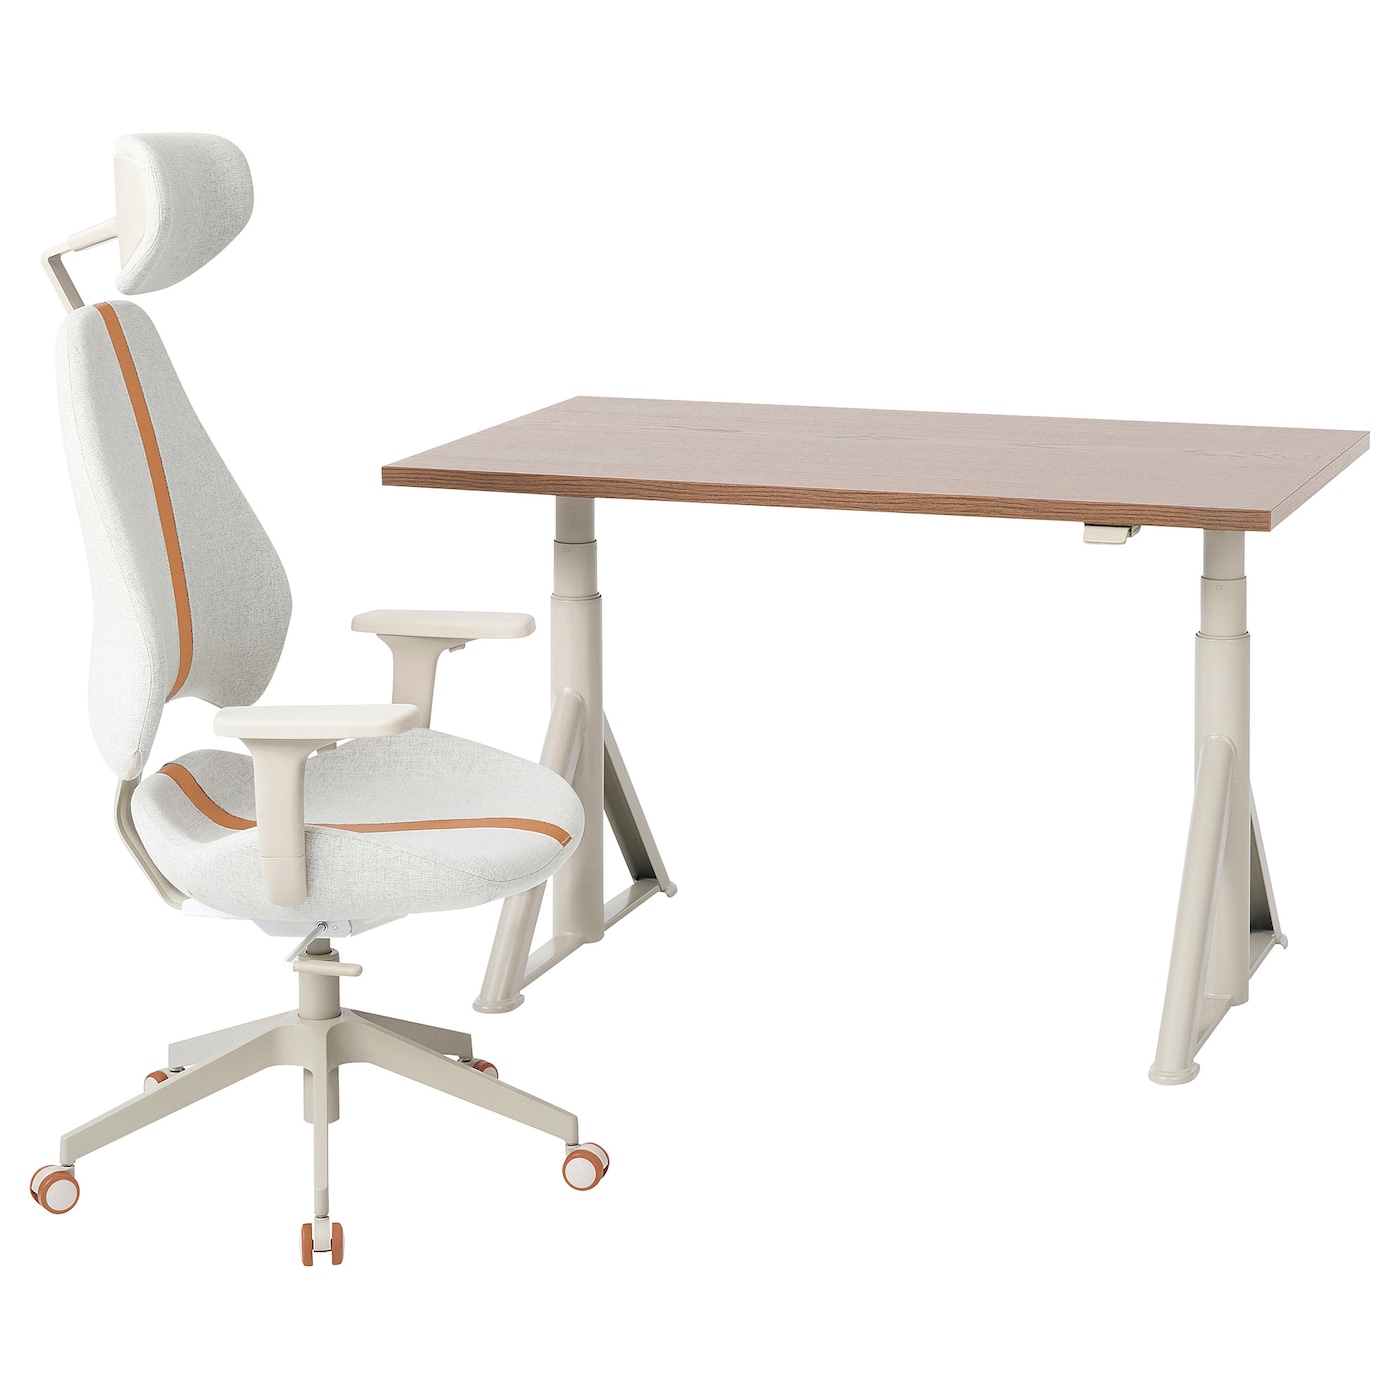 Стол и стул - IKEA IDÅSEN/GRUPPSPEL, 120х70 см, белый/коричневый, ИДОСЕН/ГРУППСПЕЛ ИКЕА